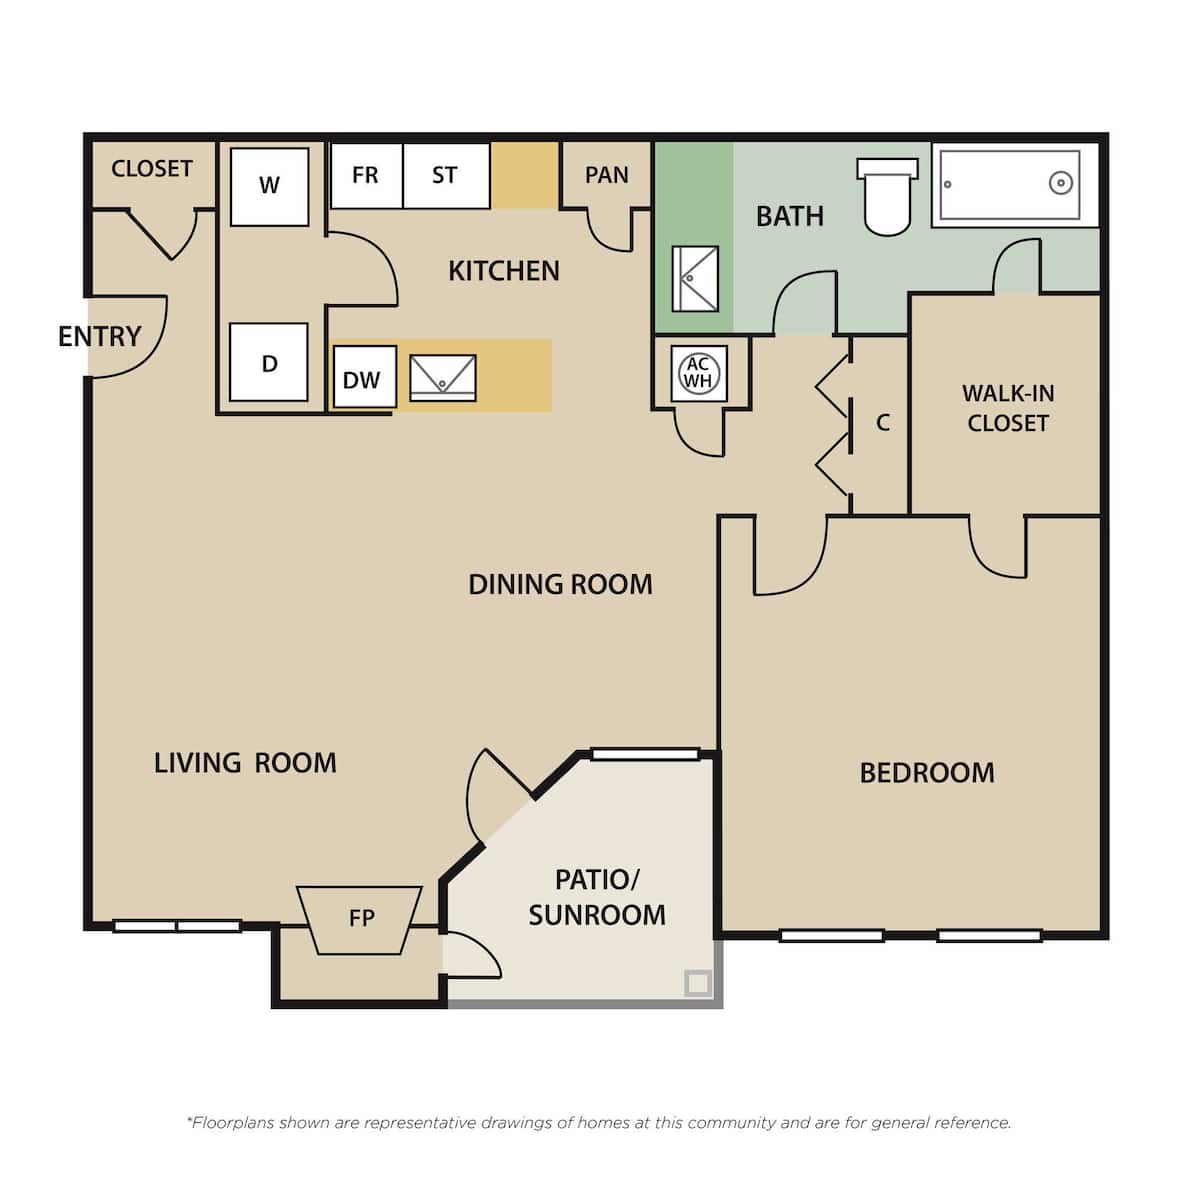 Floorplan diagram for PARK A5, showing 1 bedroom